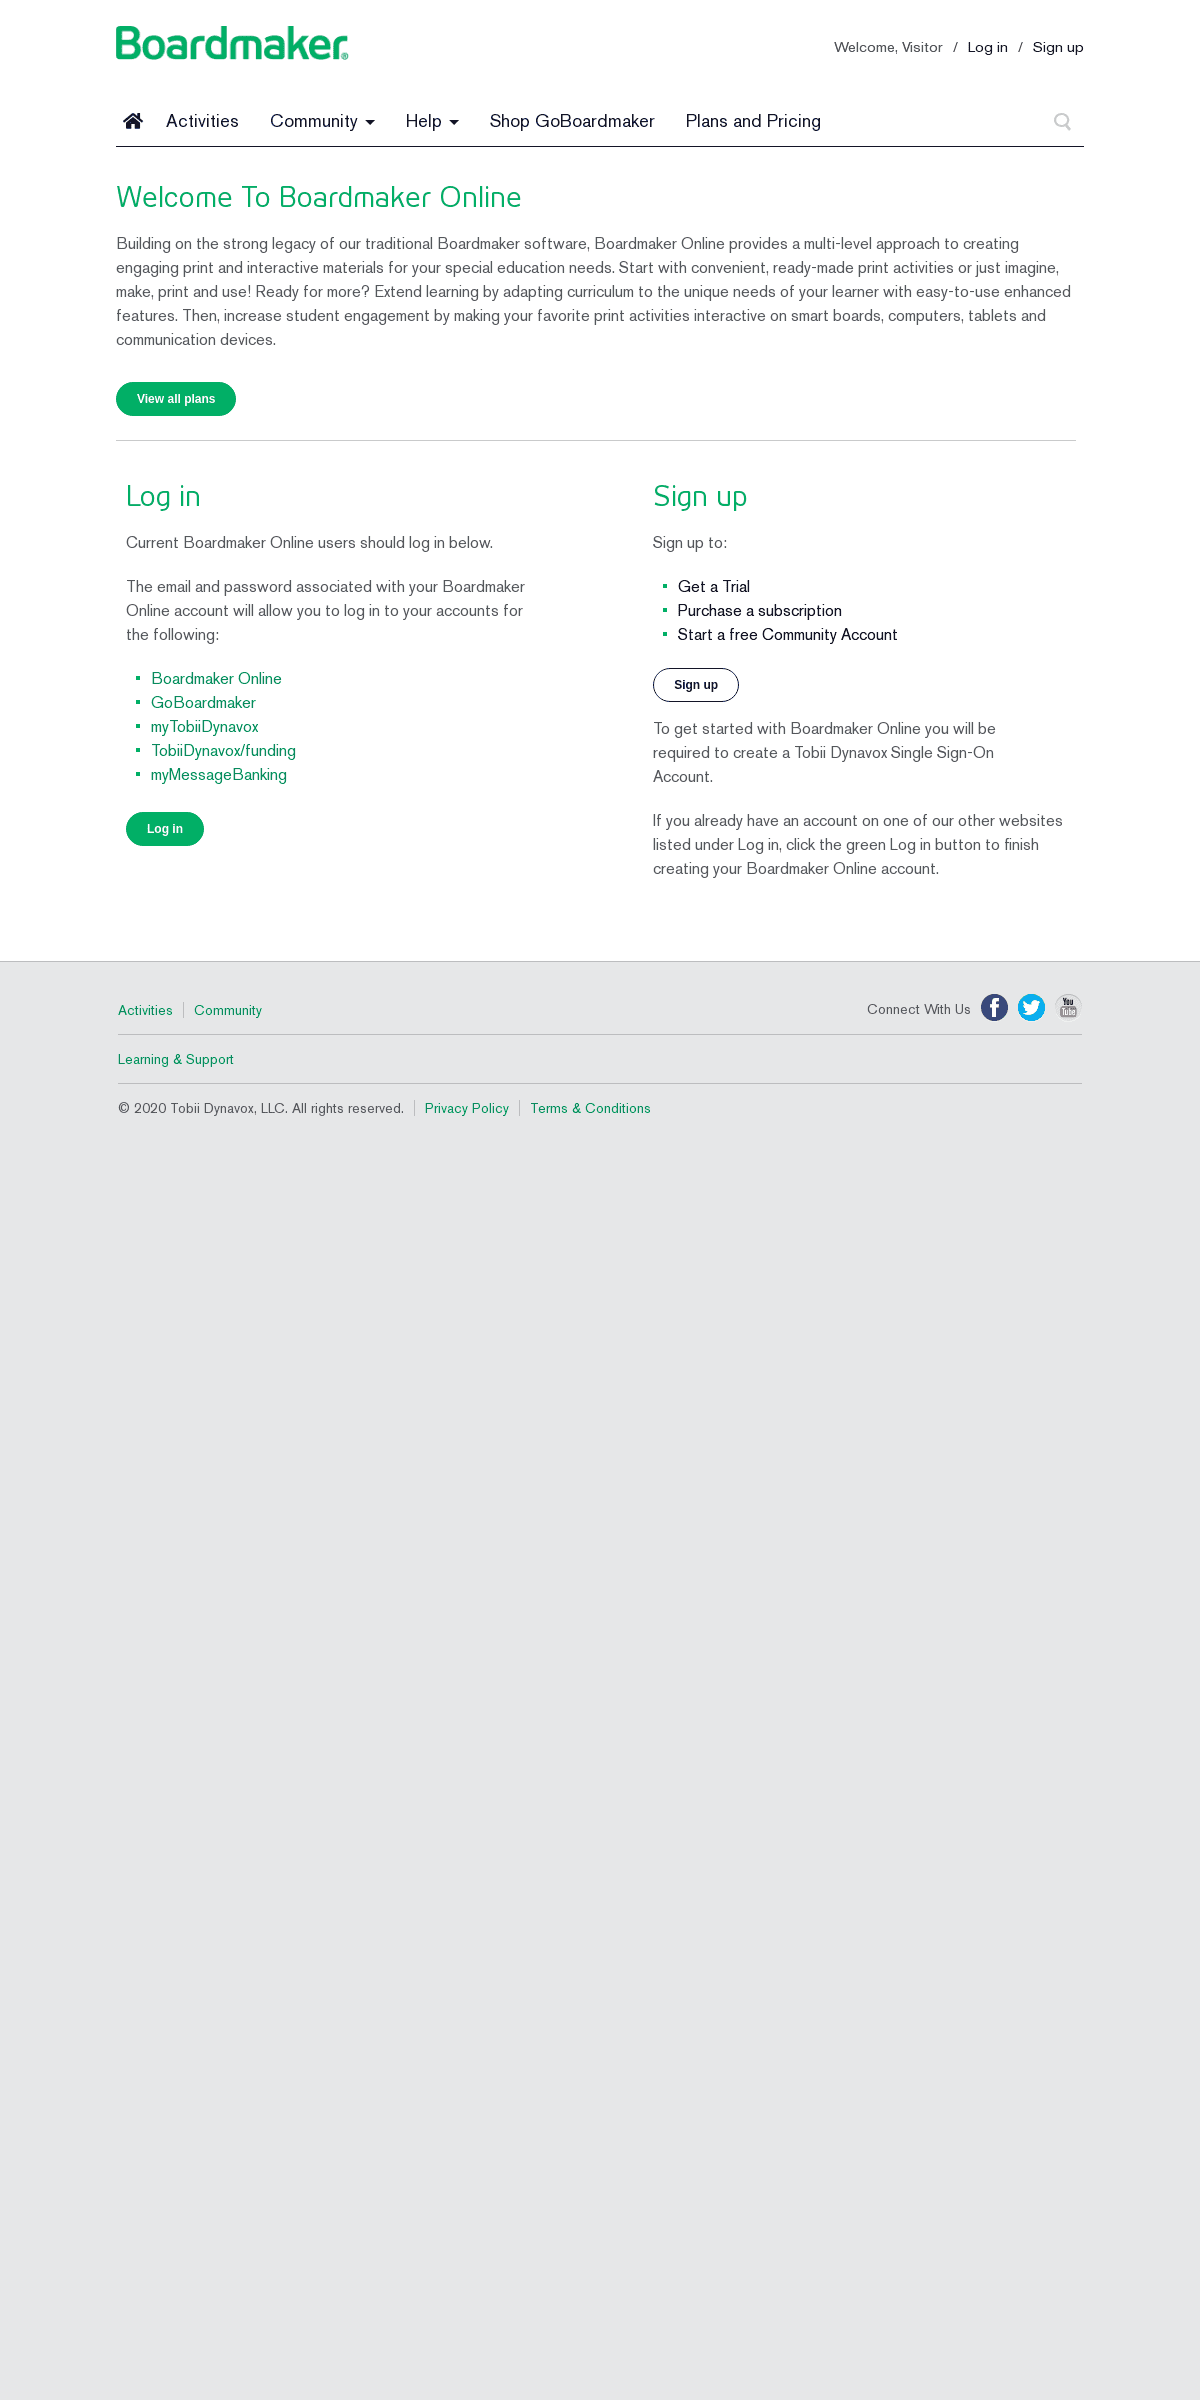 A complete backup of boardmakeronline.com